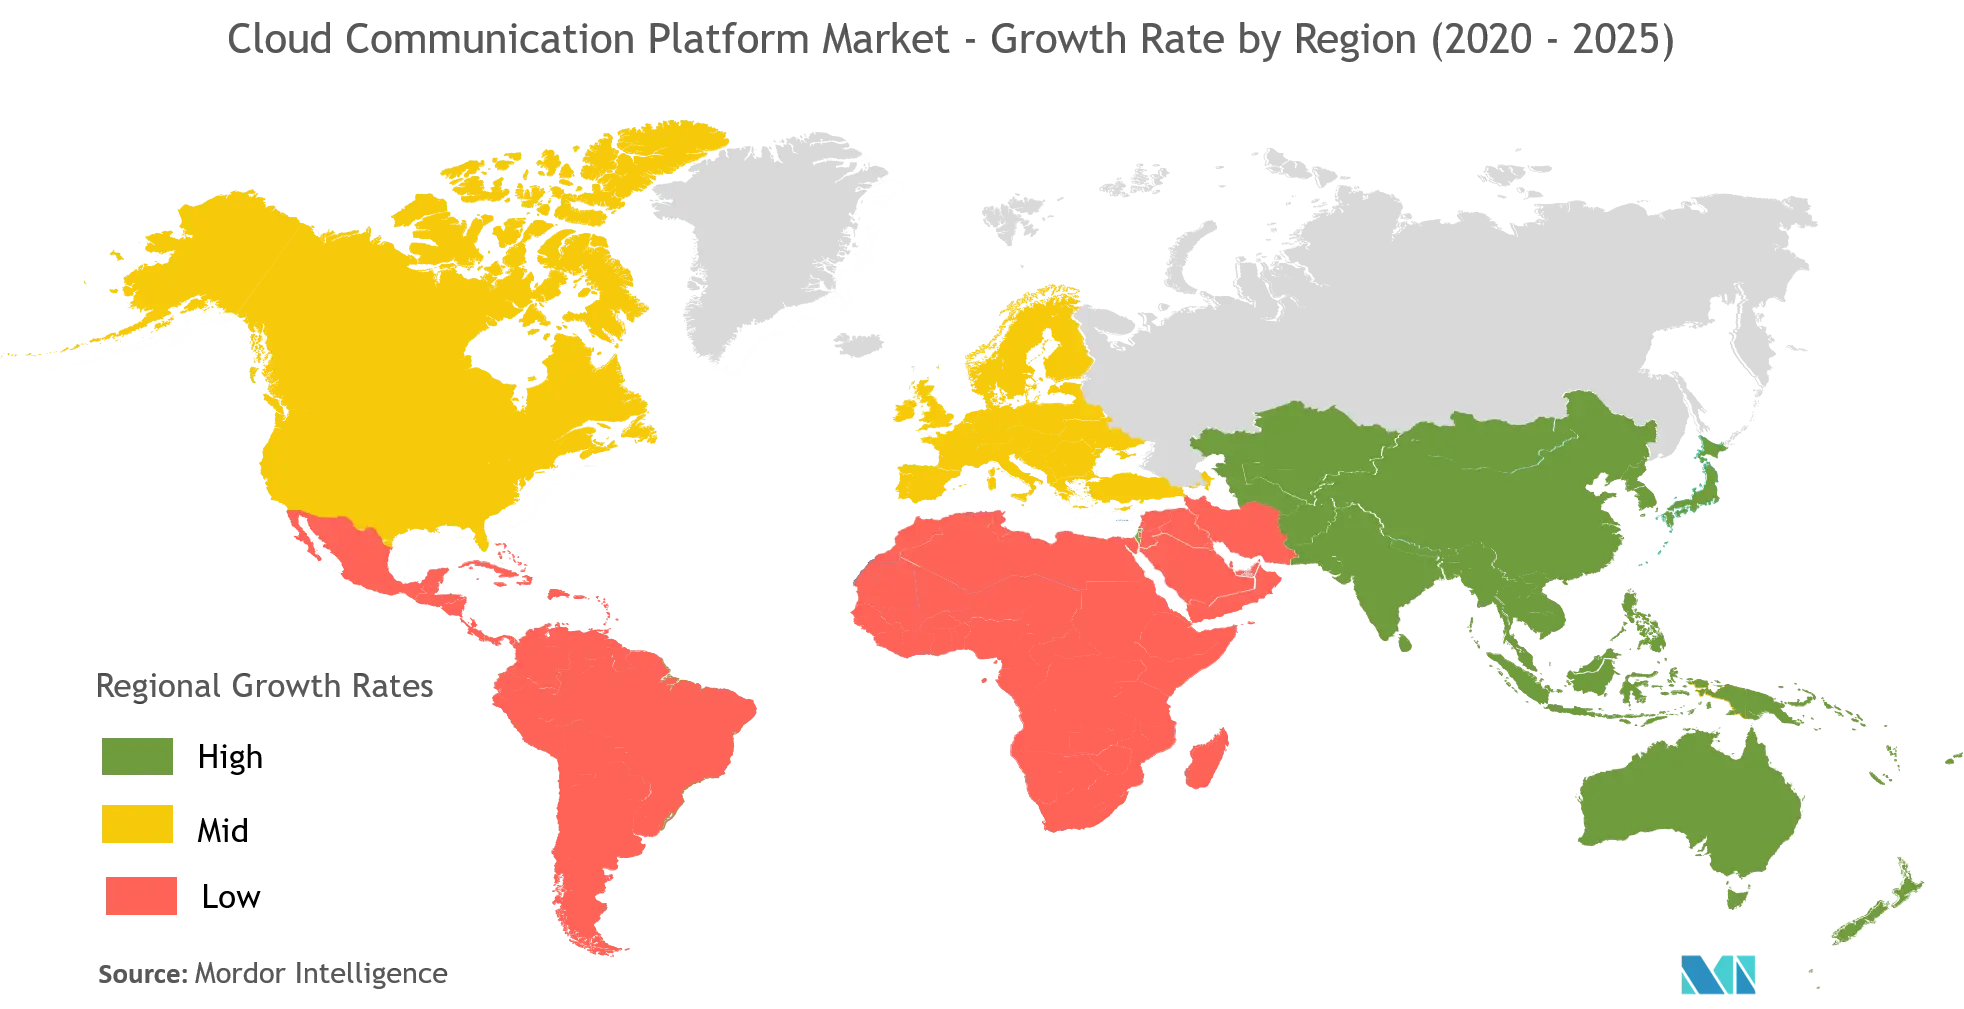 Cloud Communication Platform Market - Growth Rate by Region (2020 - 2025)